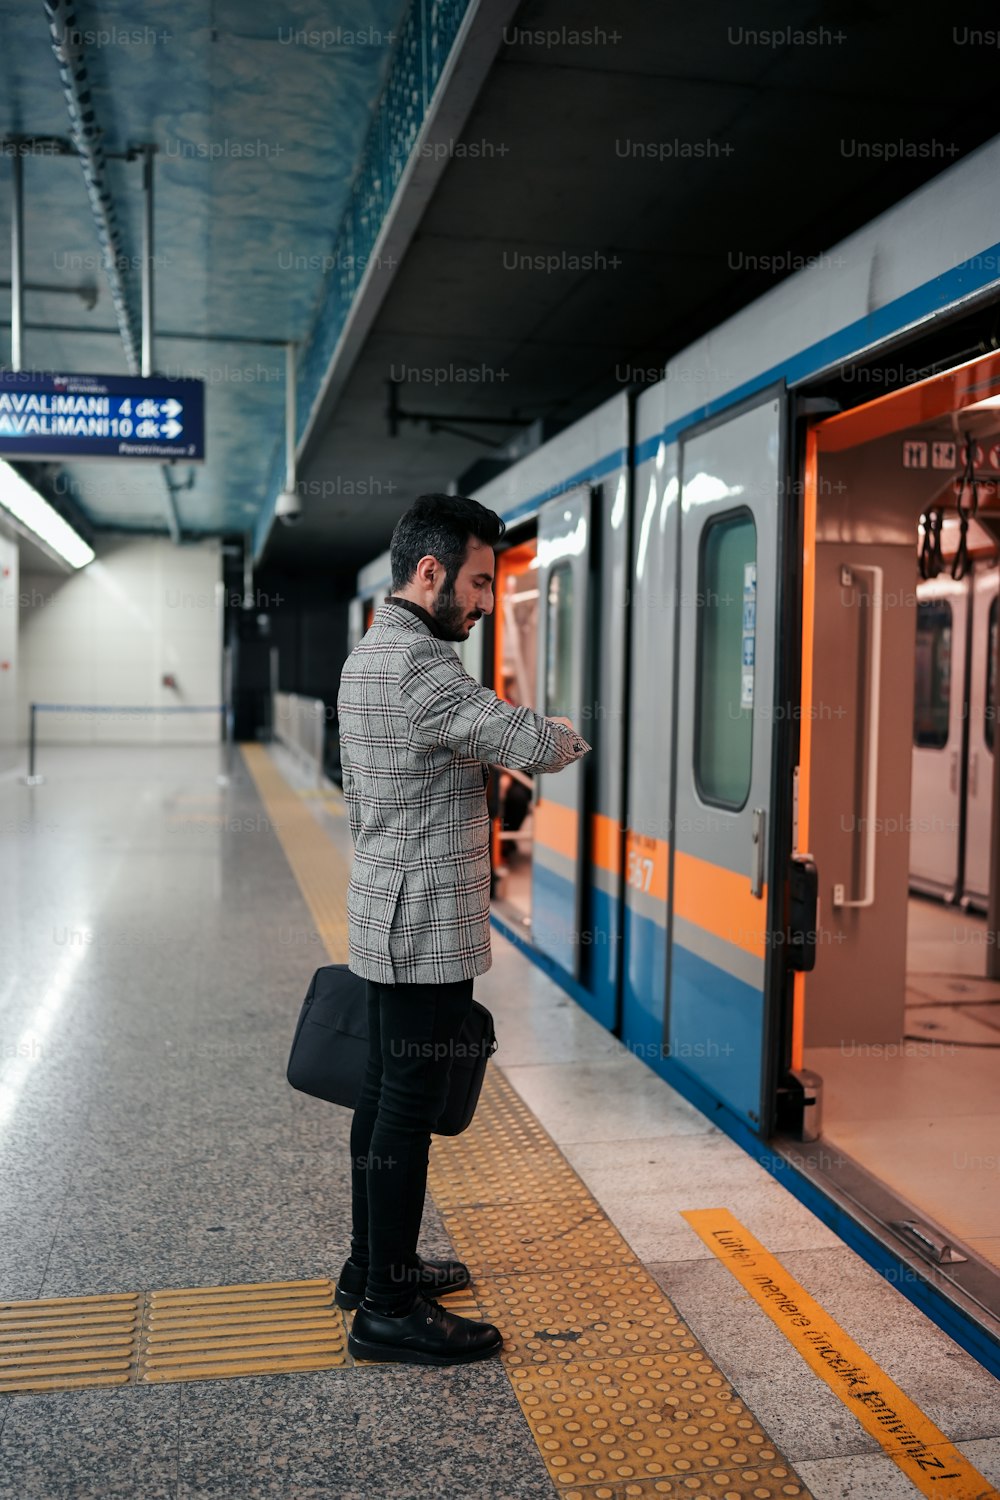 Un uomo in piedi su una piattaforma accanto a un treno